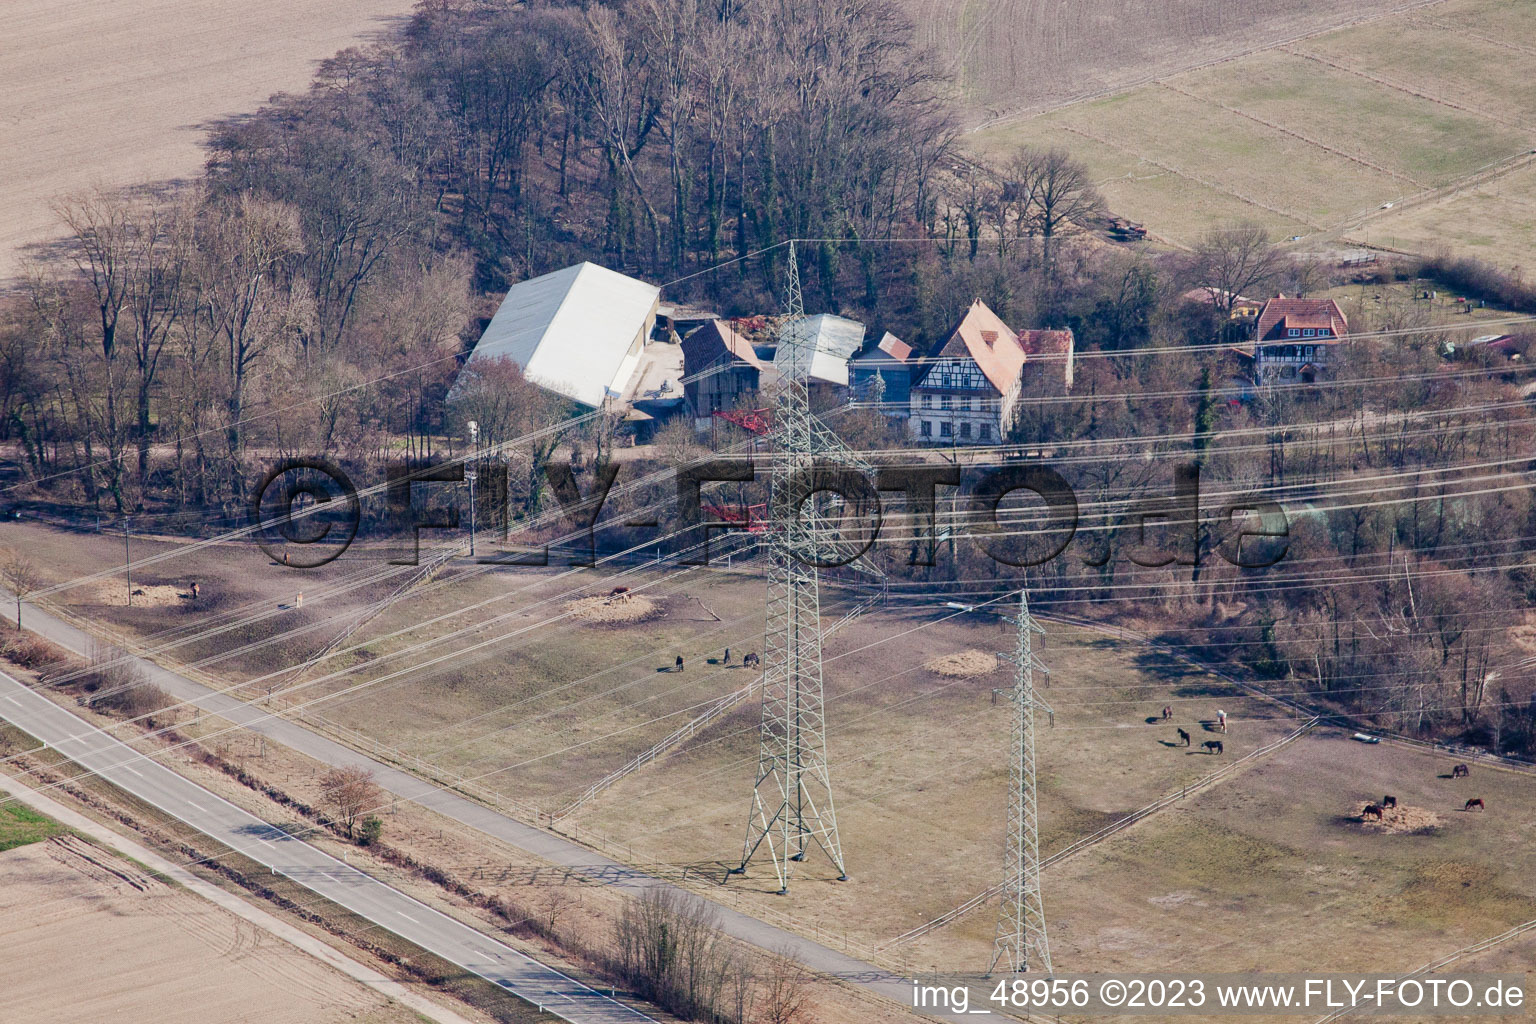 Wanzheim Mill in Rheinzabern in the state Rhineland-Palatinate, Germany seen from a drone